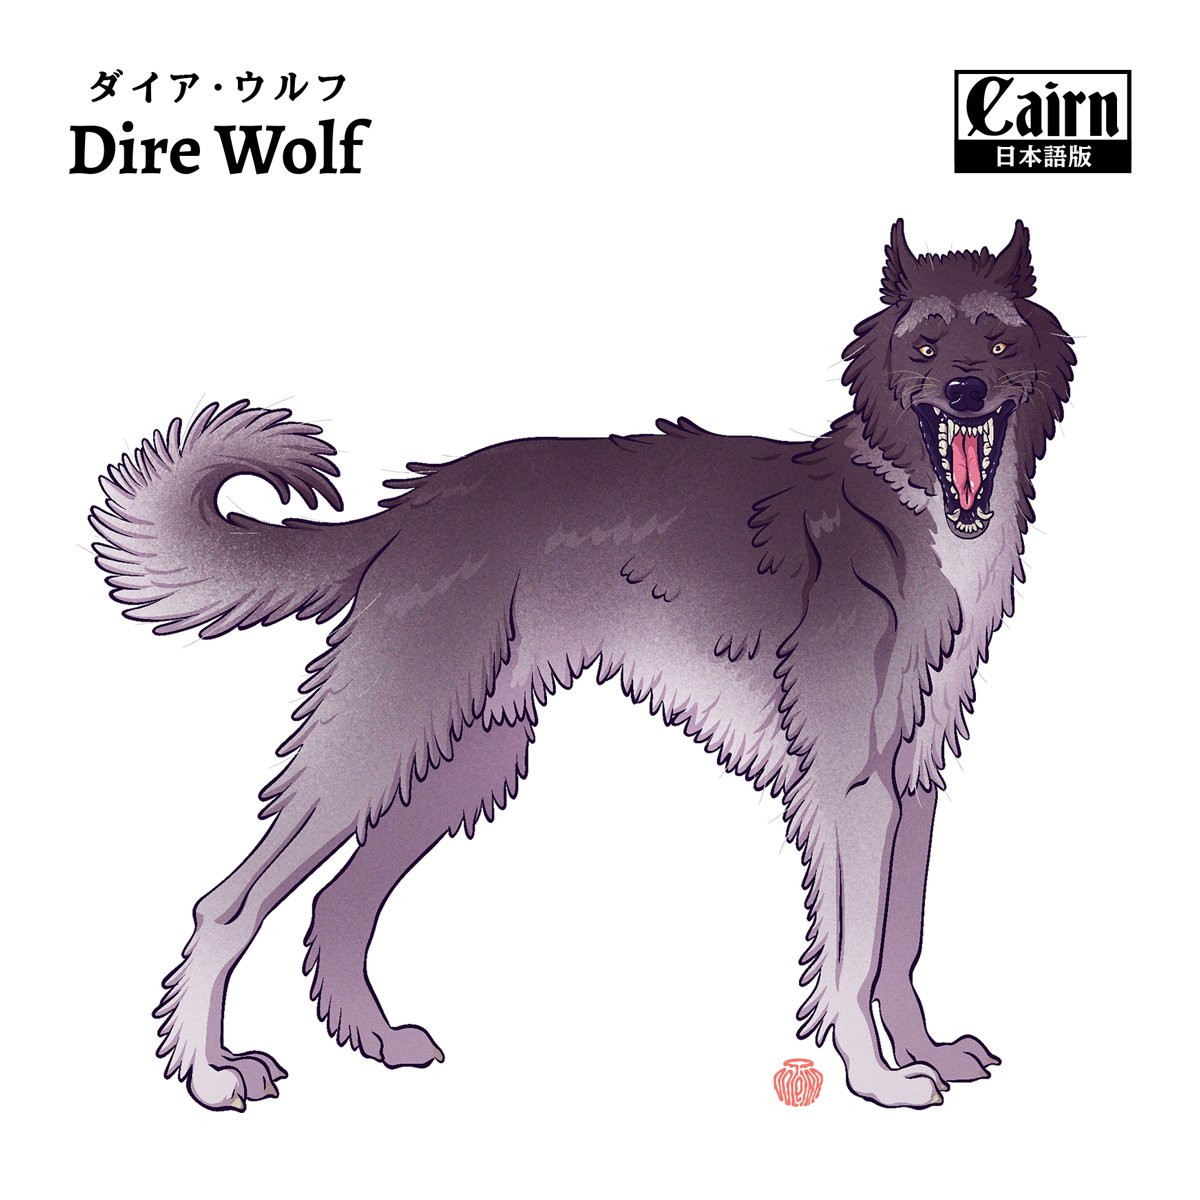 🐎🐺［101/145］
#direwolf #ダイアウルフ #wolf #狼 #オオカミ #bestiary #cairnrpg #rpg #trpg #ttrpg #creaturedesign #monsterdesign #characterdesign #fantasy #ファンタジー #illustration #イラスト